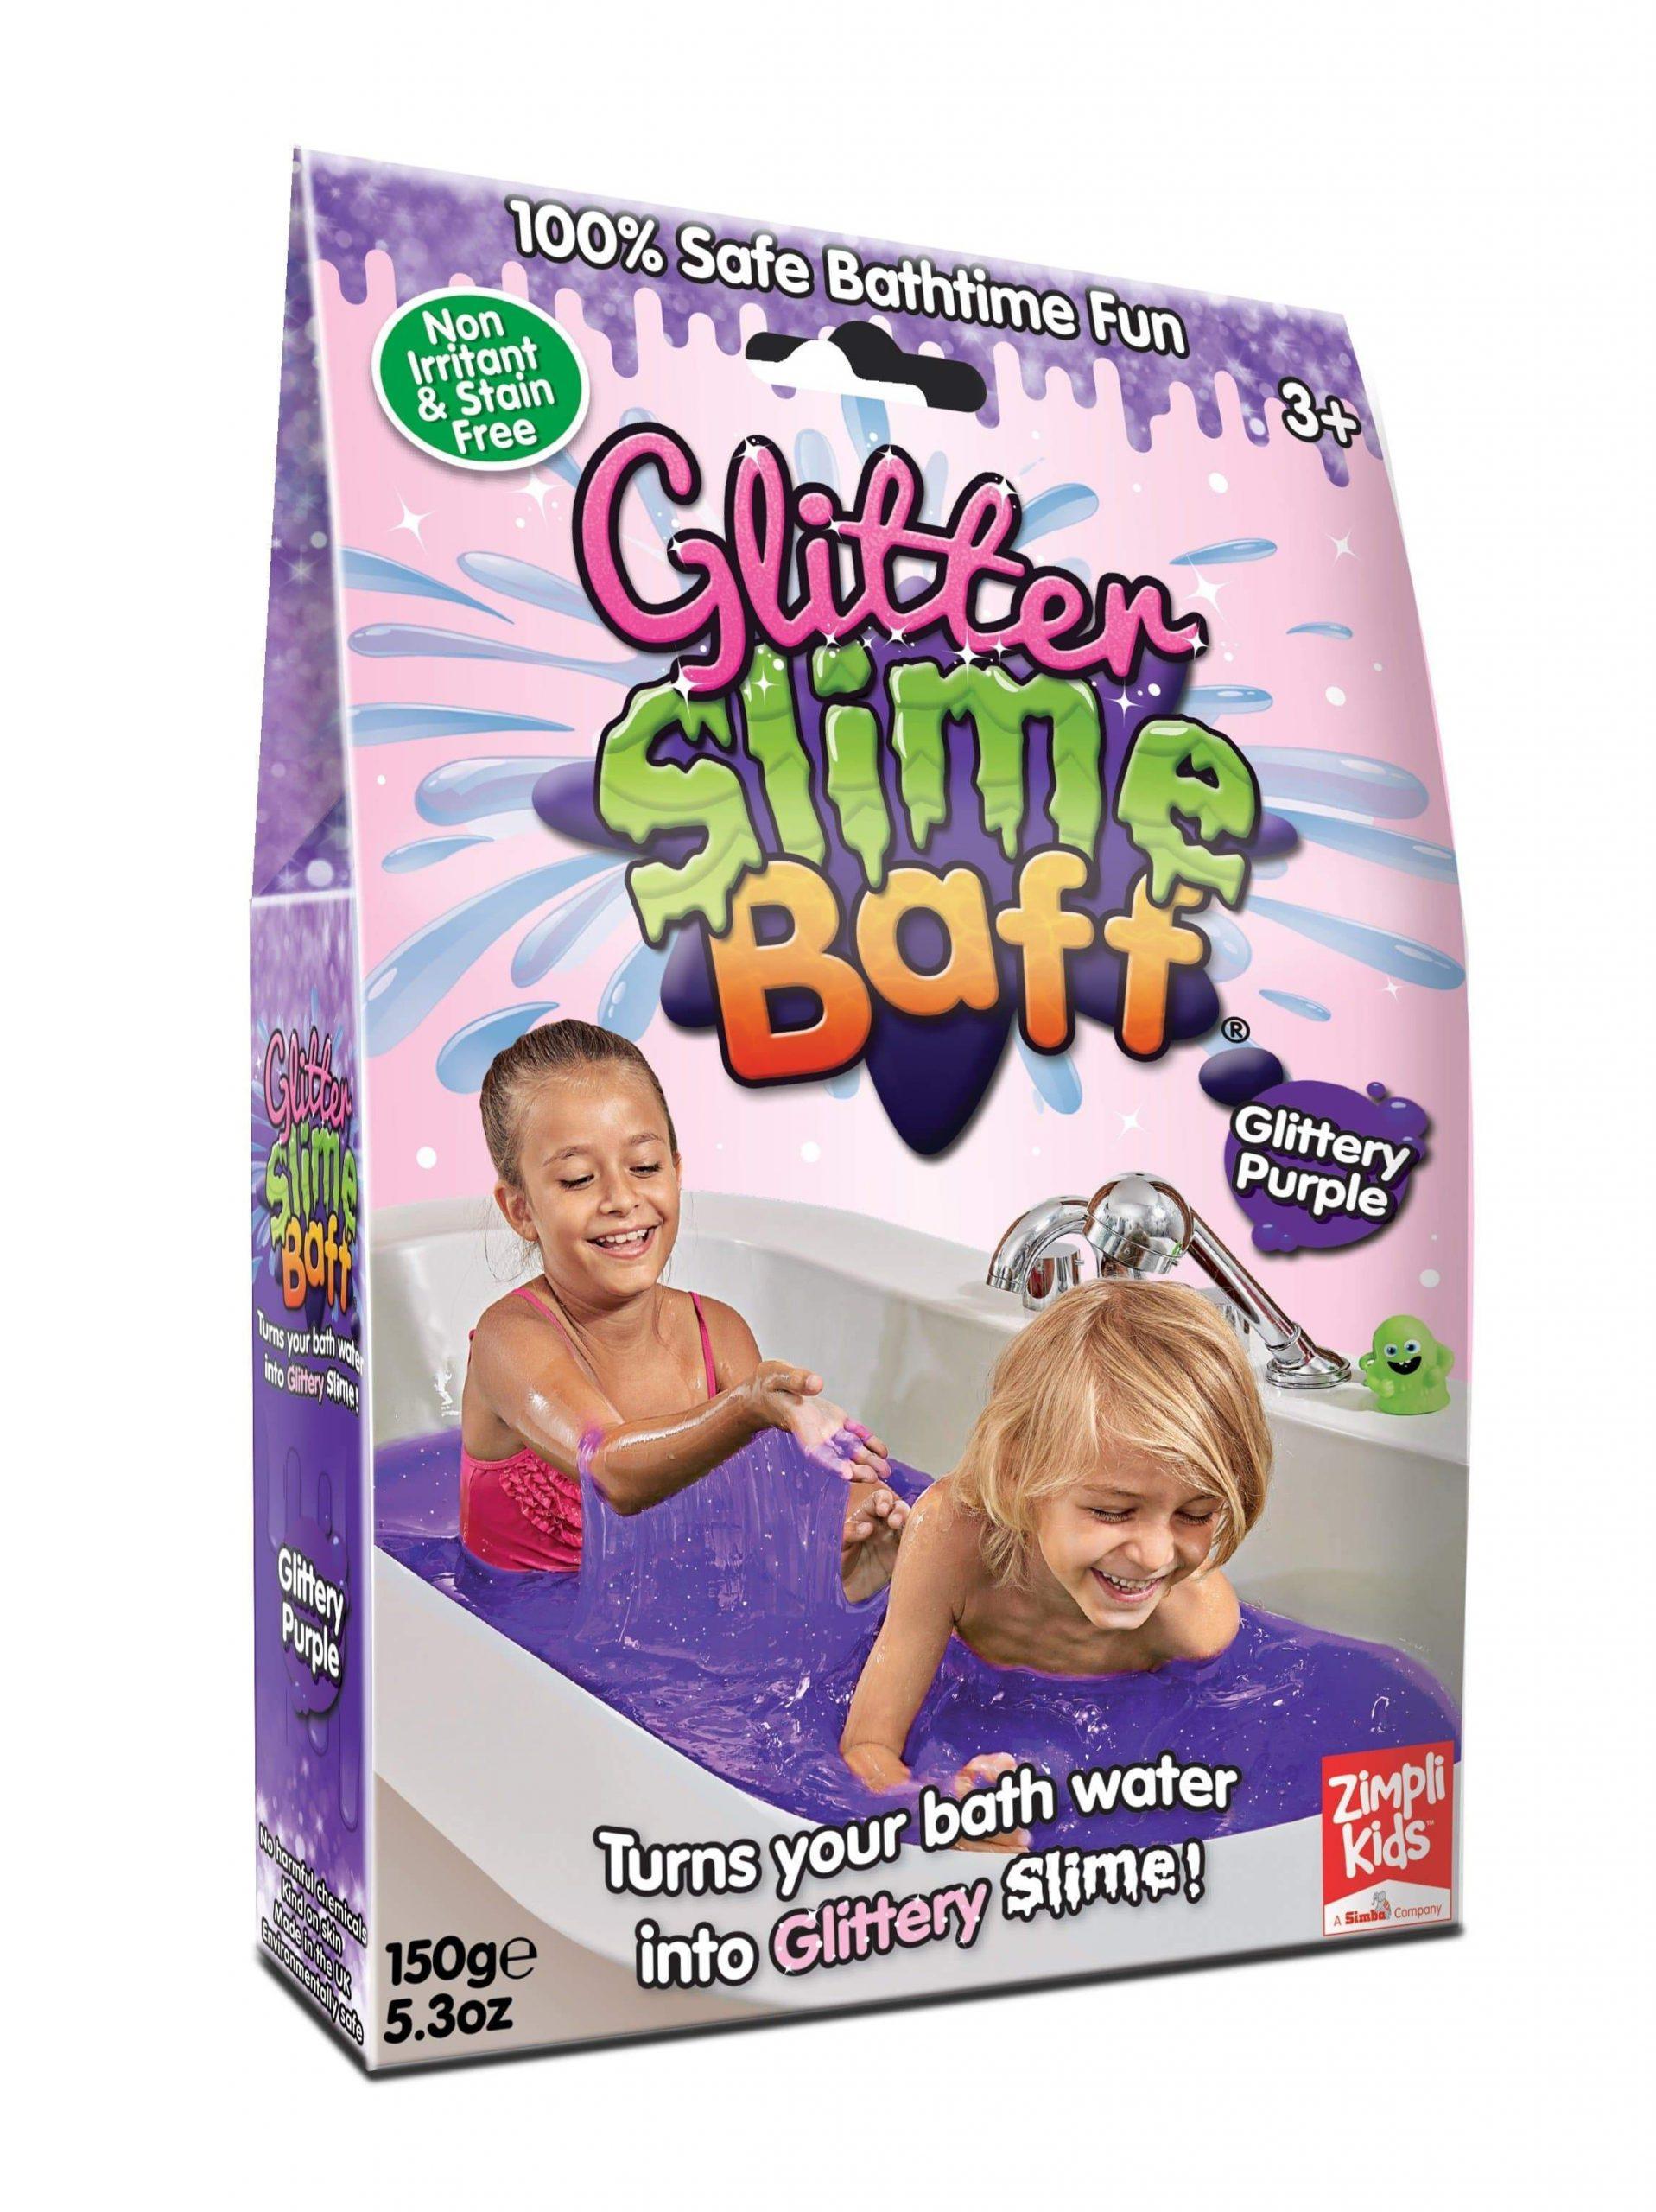 glibbi-Zimpli kids glitter slime baff purple 150g